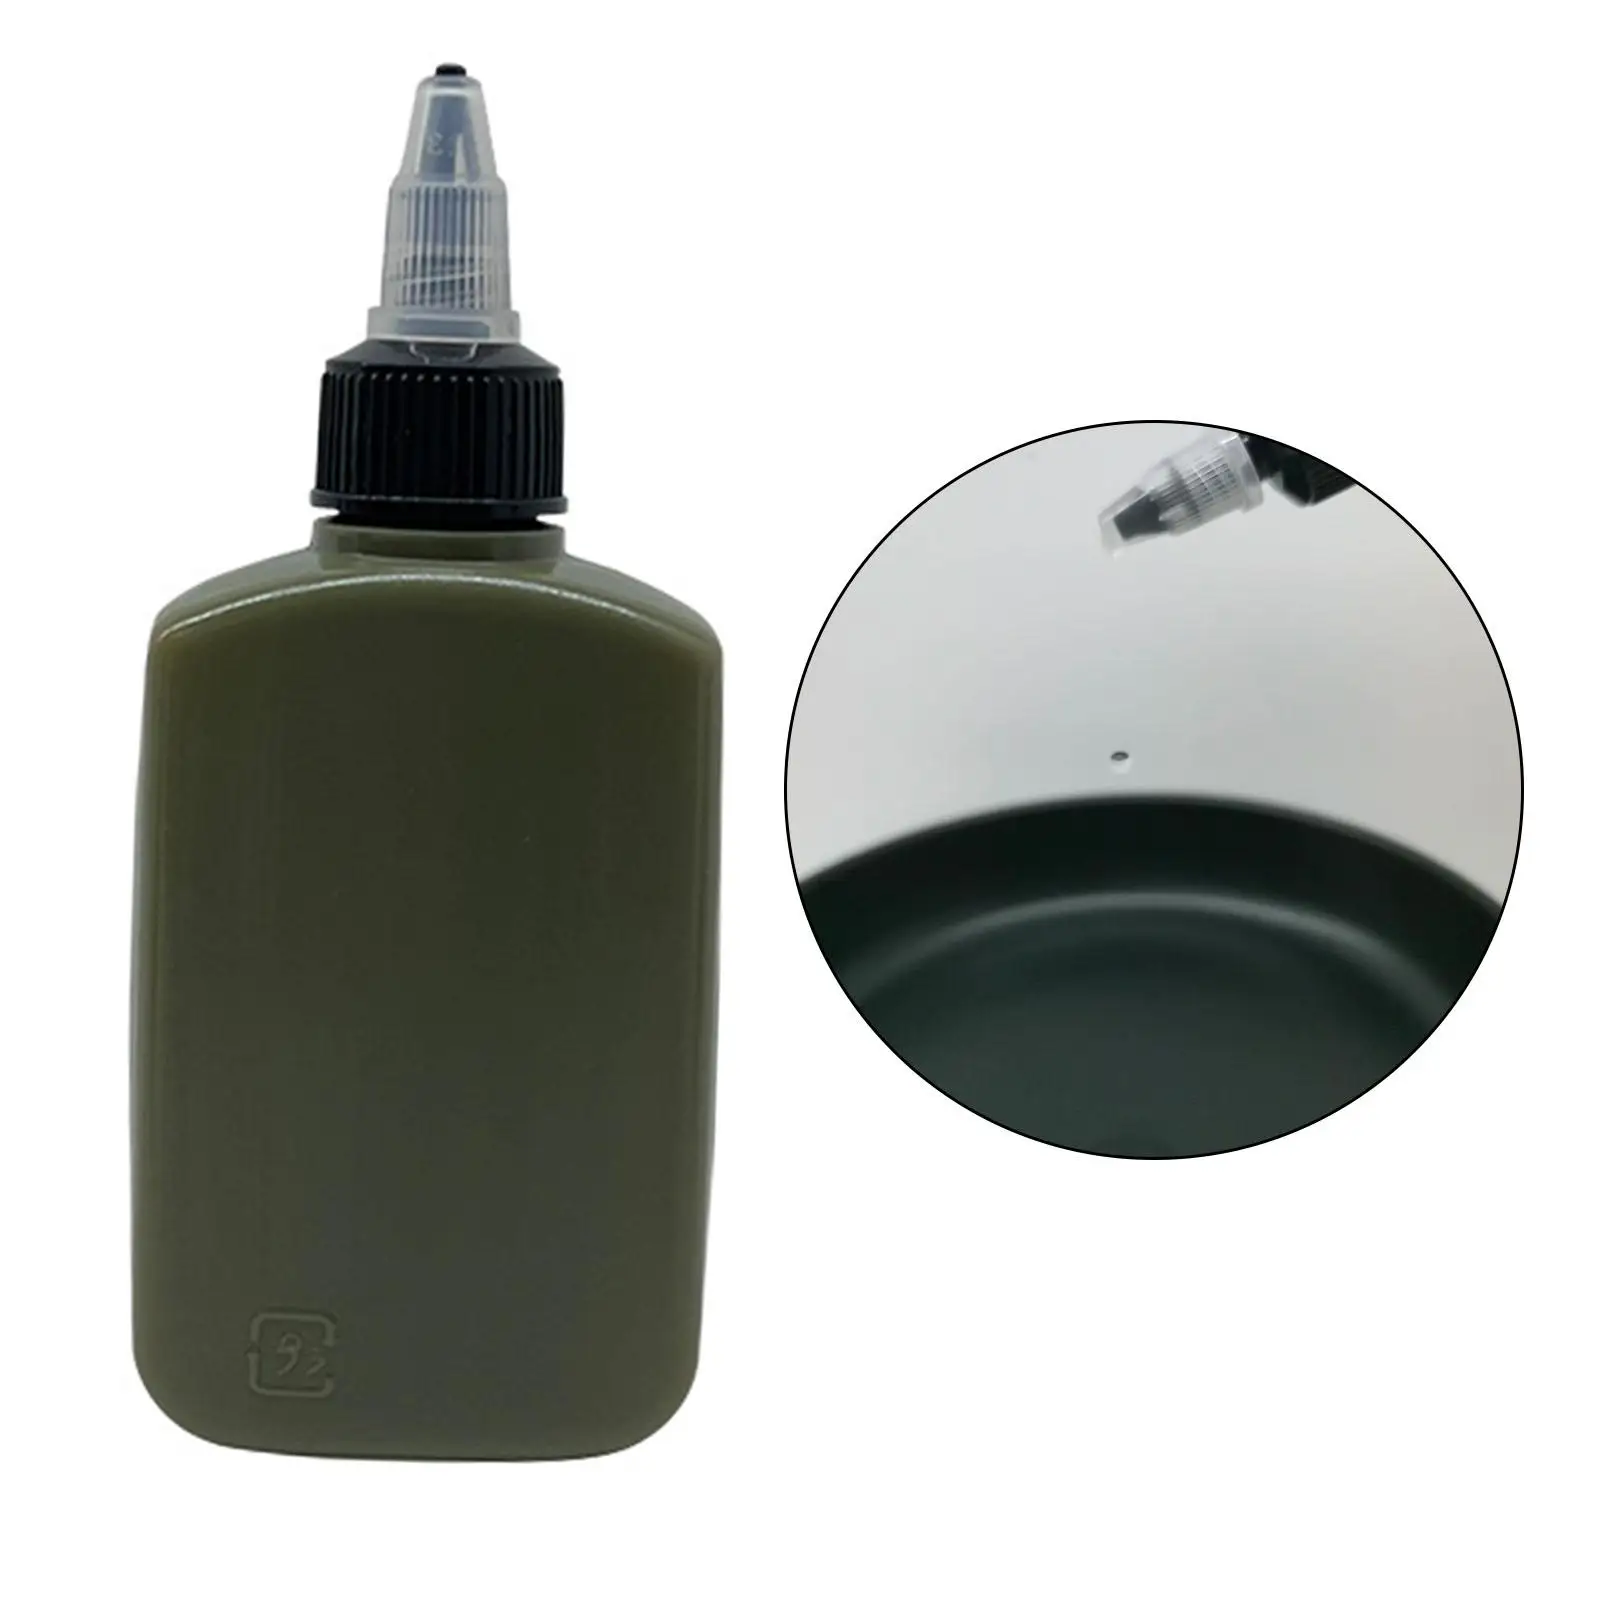 Portable Outdoor Oil Bottle Tableware Vinegar Dispenser Bottle Storage Box Sealed for Barbecue Supplies Travel Picnic Camping